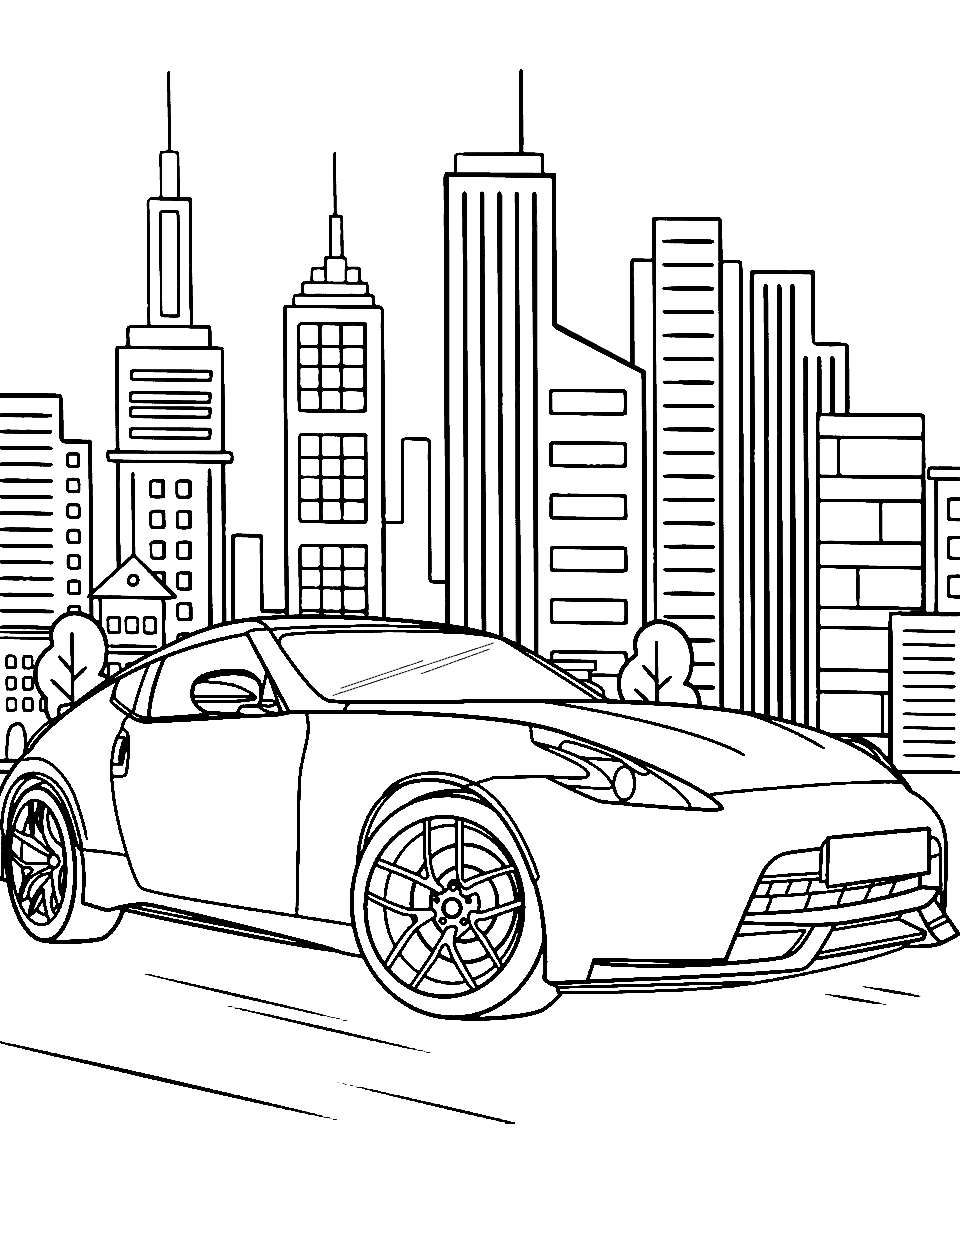 Street Race Car Coloring Page - A simple race car speeding down a city street.